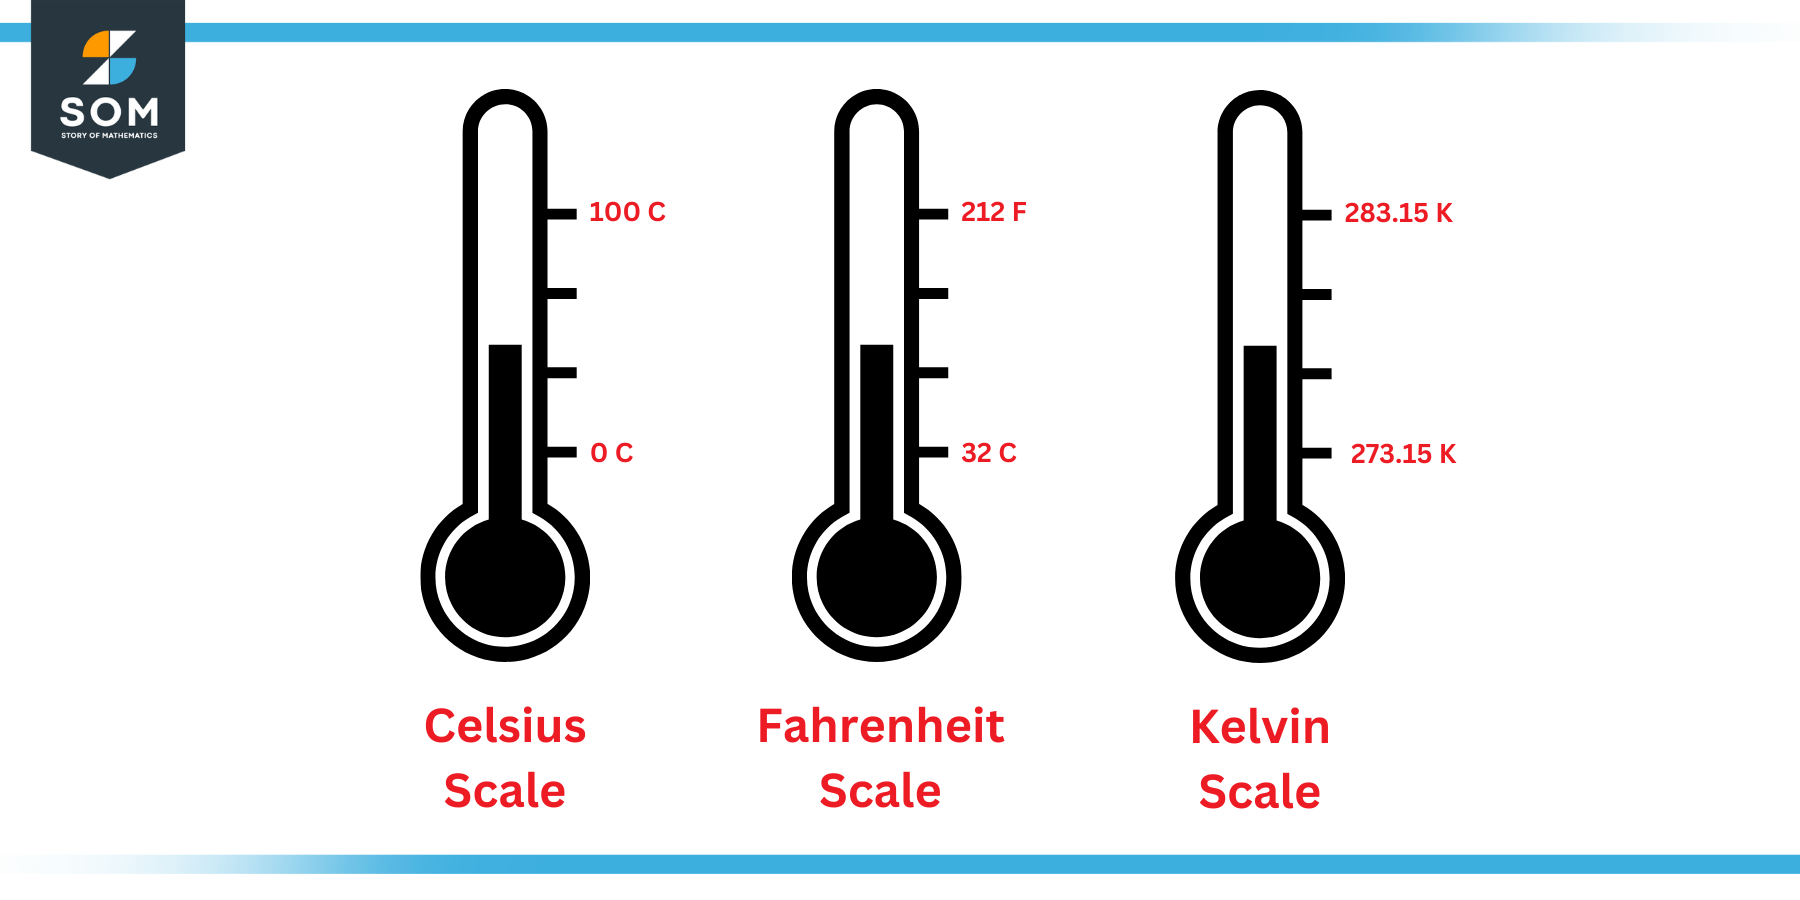 Celsius Fahrenheit and Kelvin scales